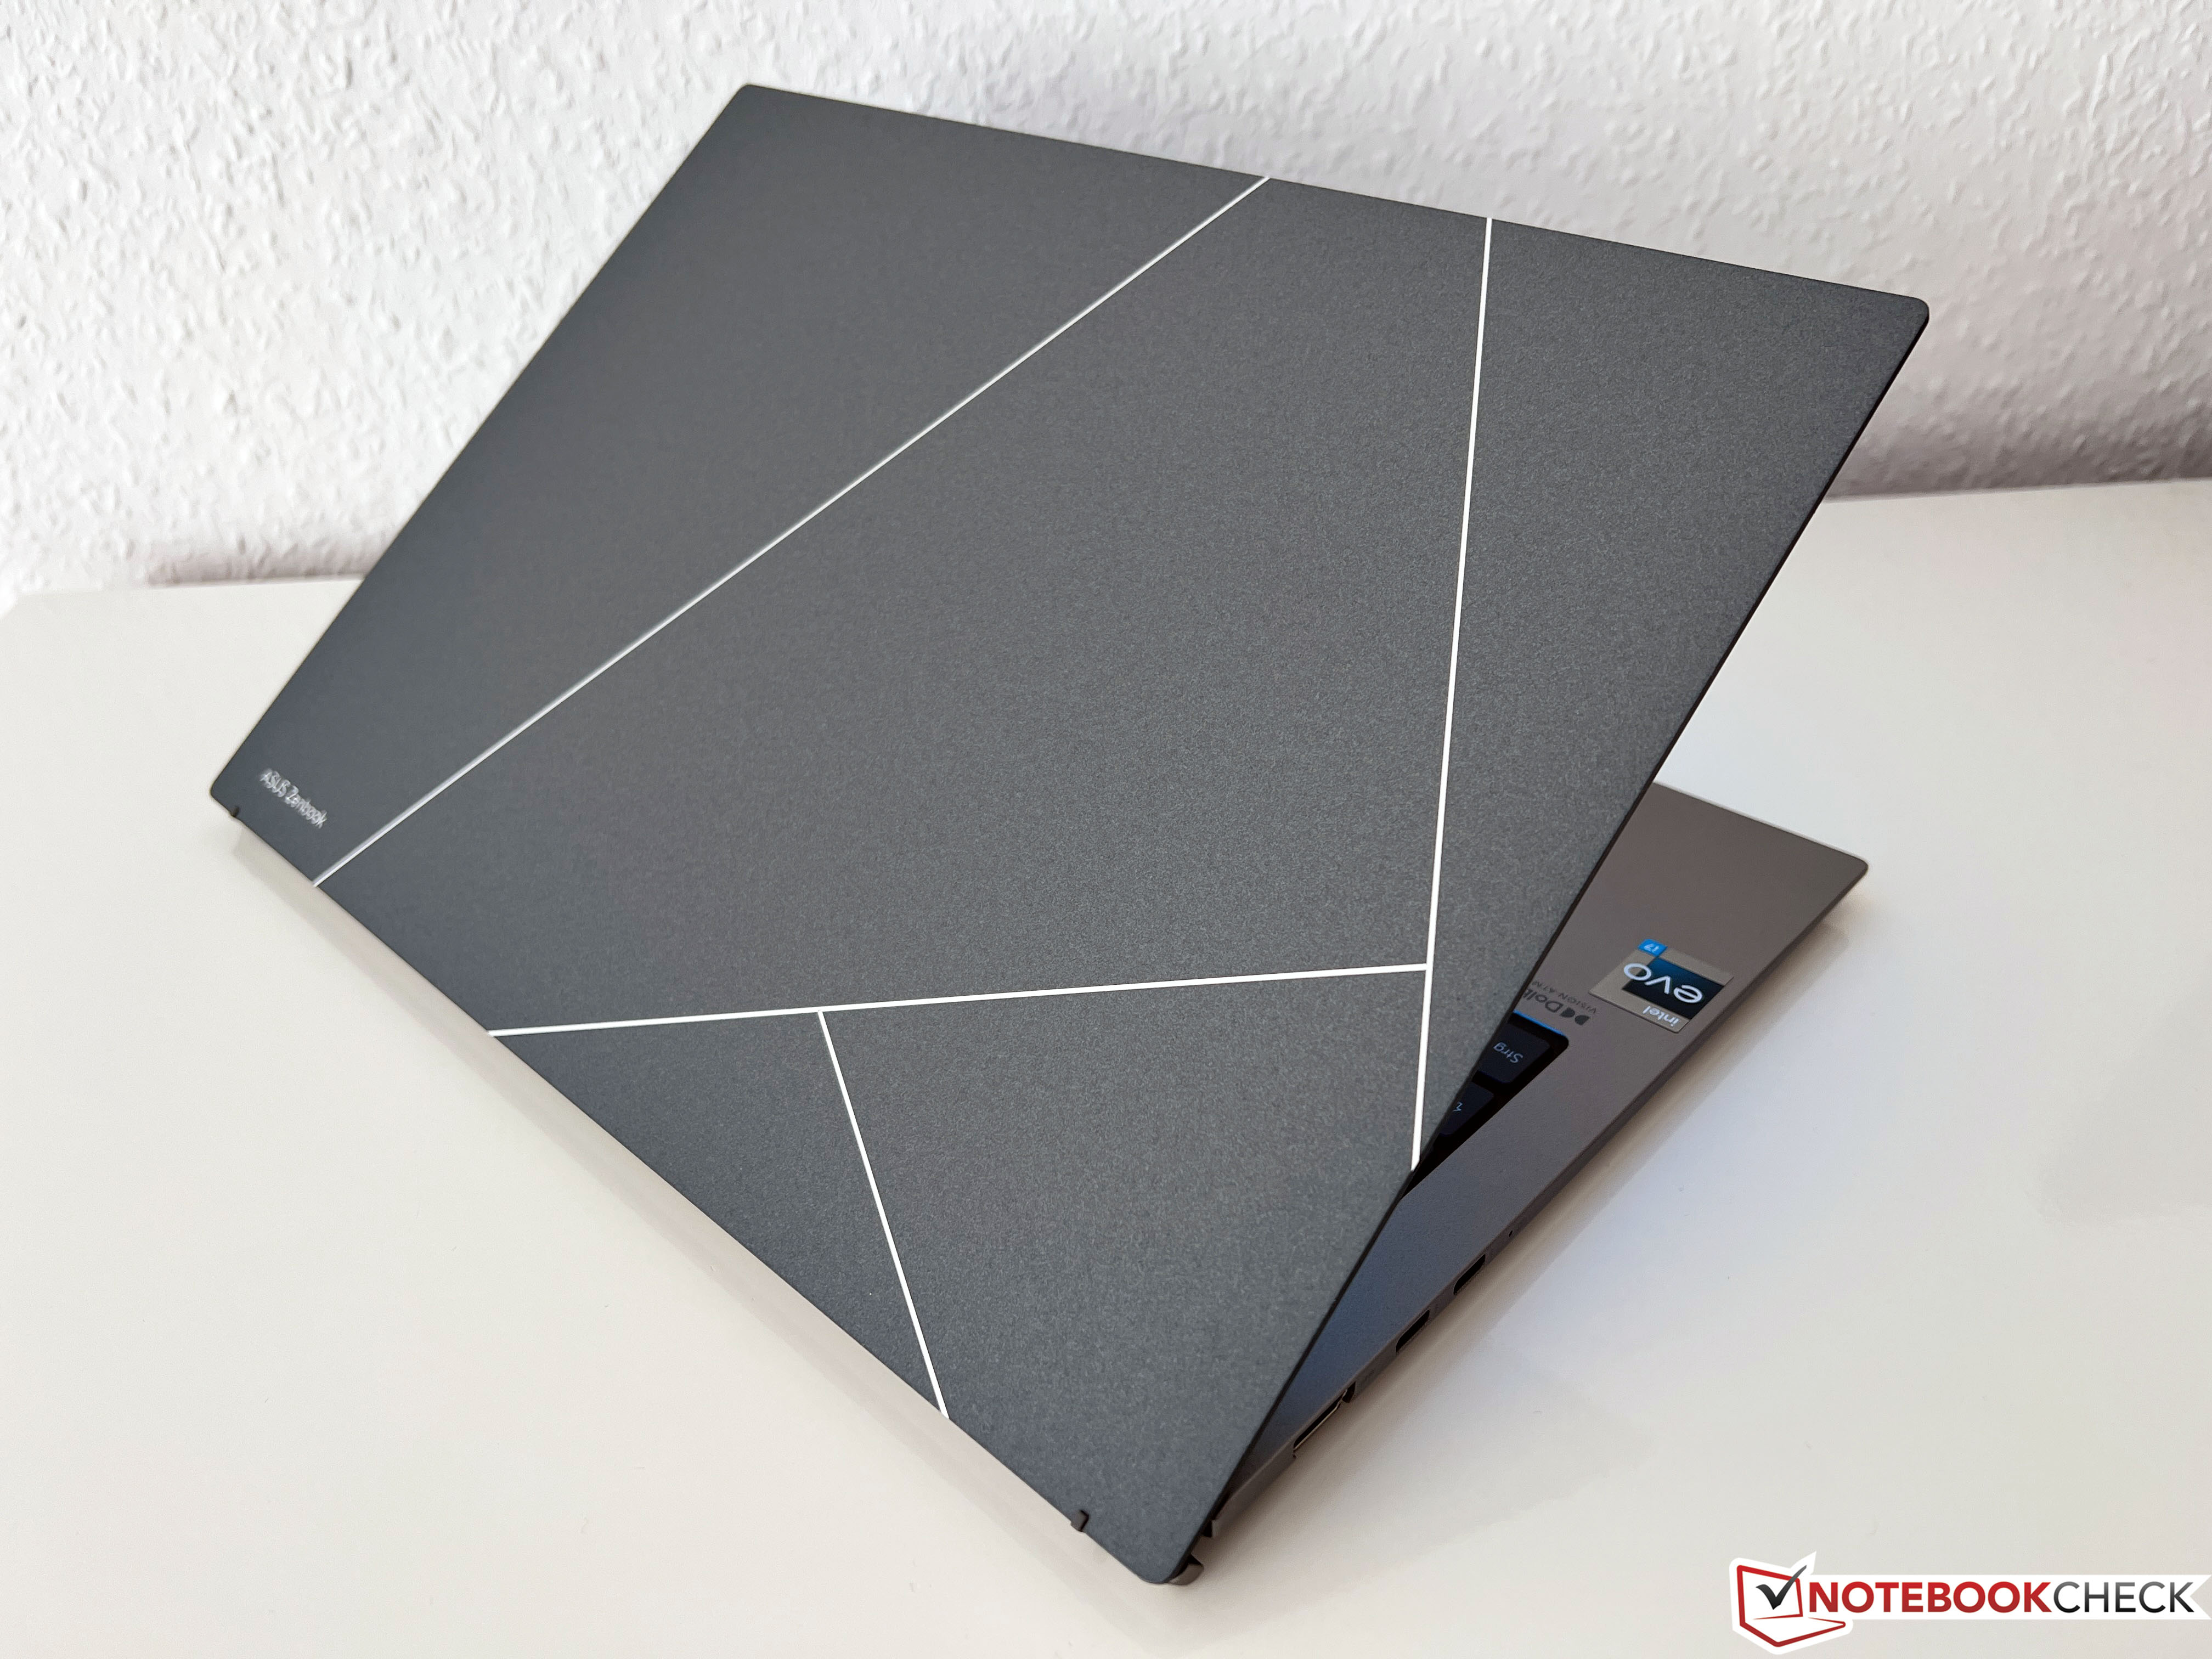 Asus Zenbook S 13 OLED Review: Ryzen 6800U Goes Thin